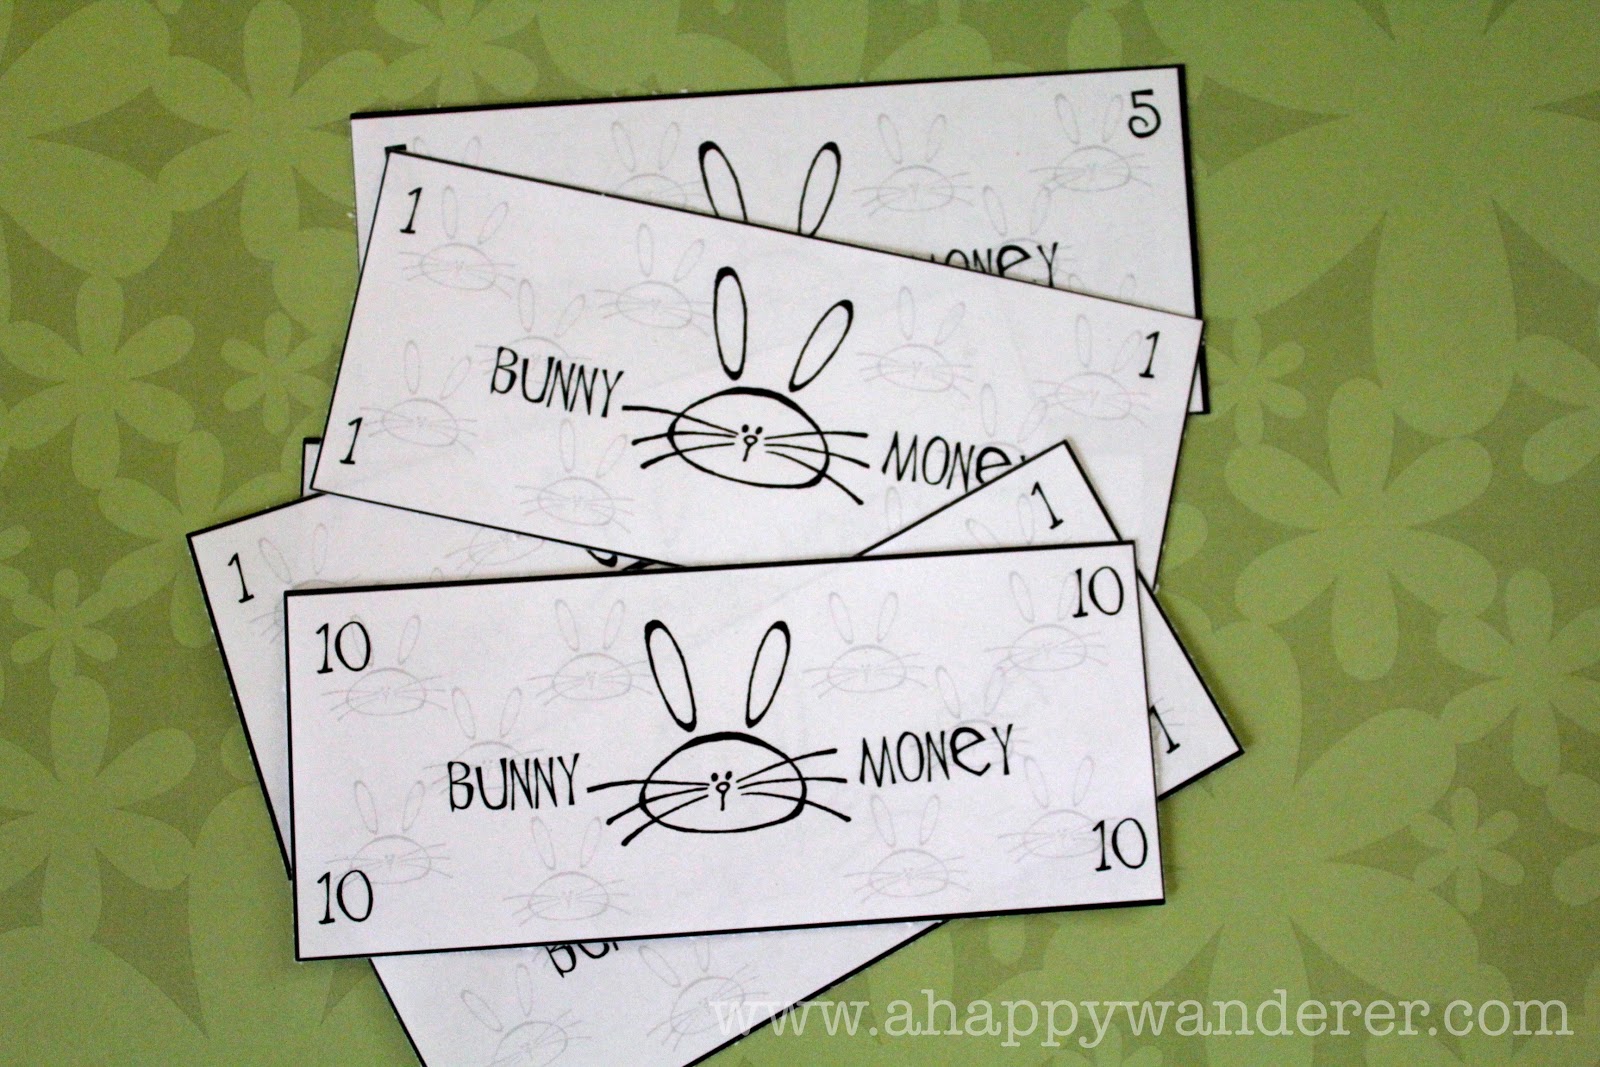 a-happy-wanderer-bunny-money